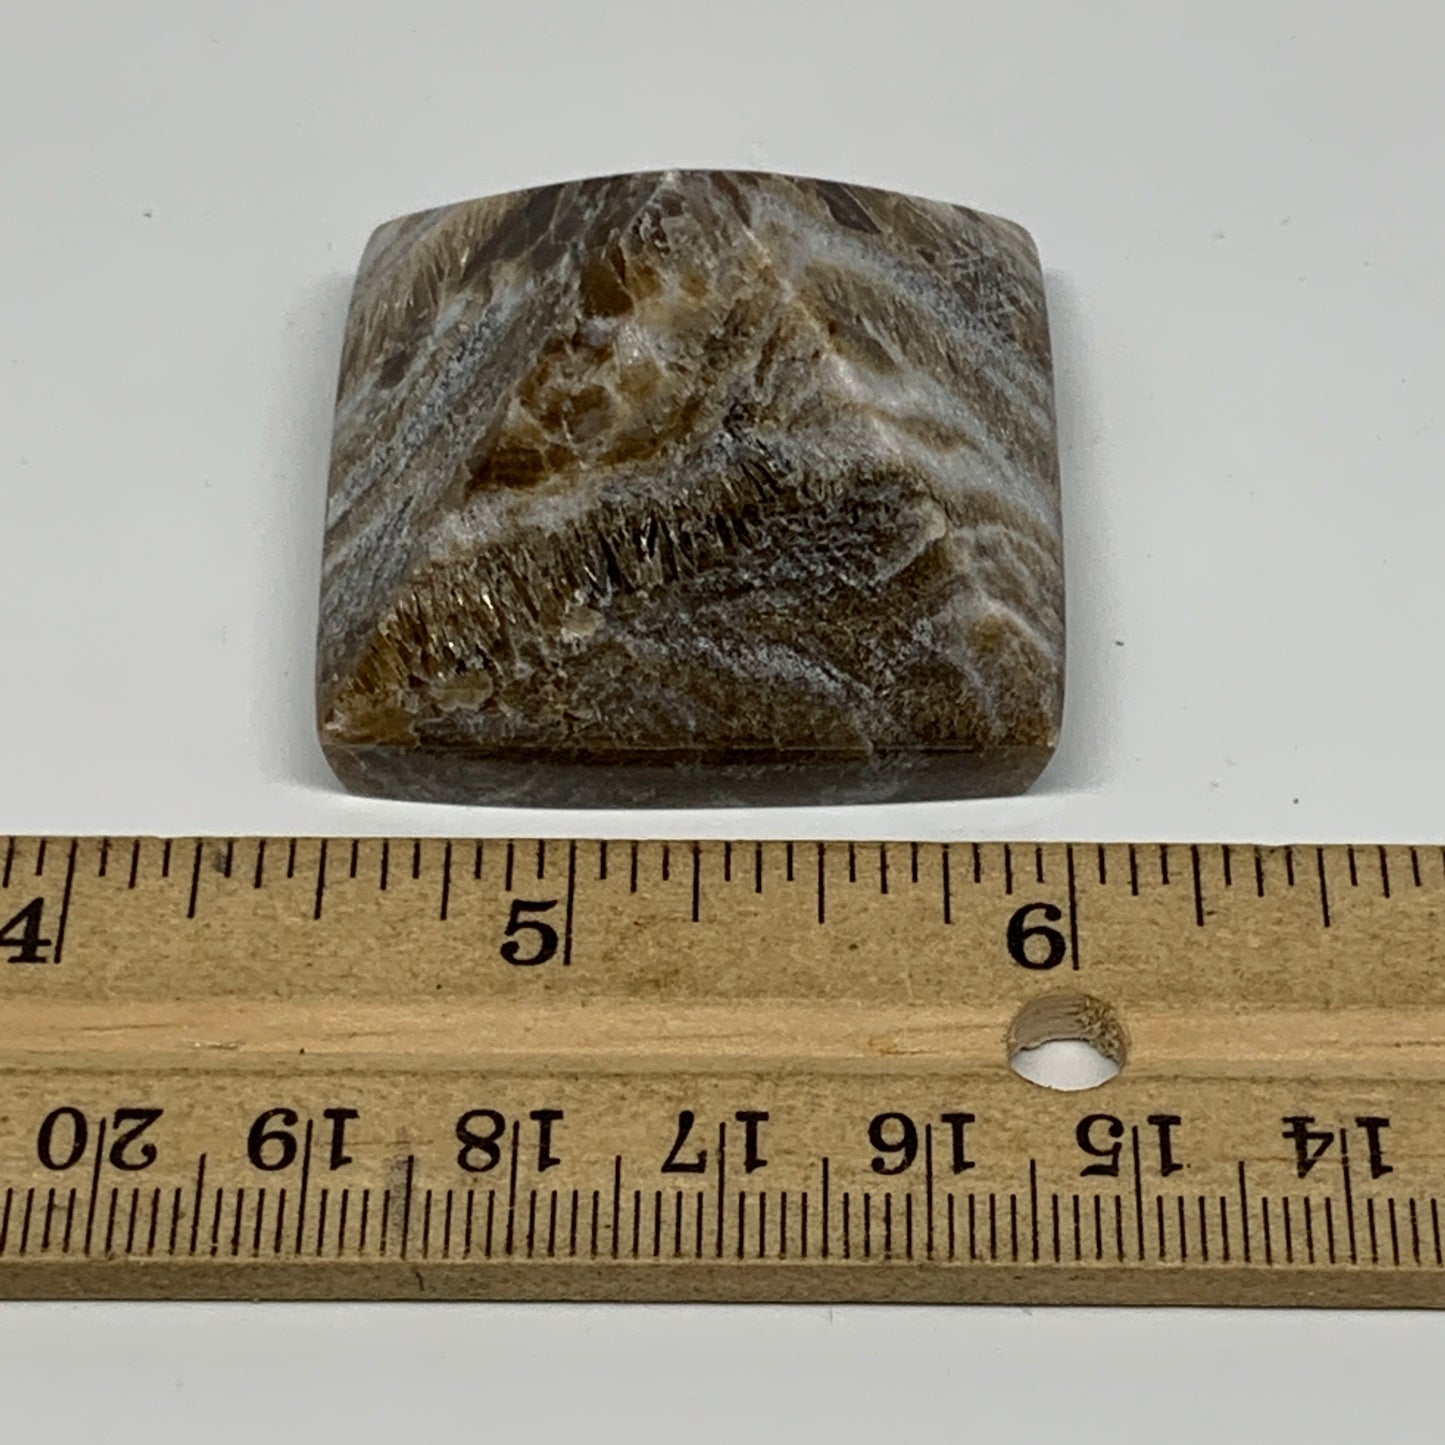 49.7g, 1.1"x1.6"x1.6" Chocolate/Gray Onyx Pyramid Gemstone @Morocco, B19020